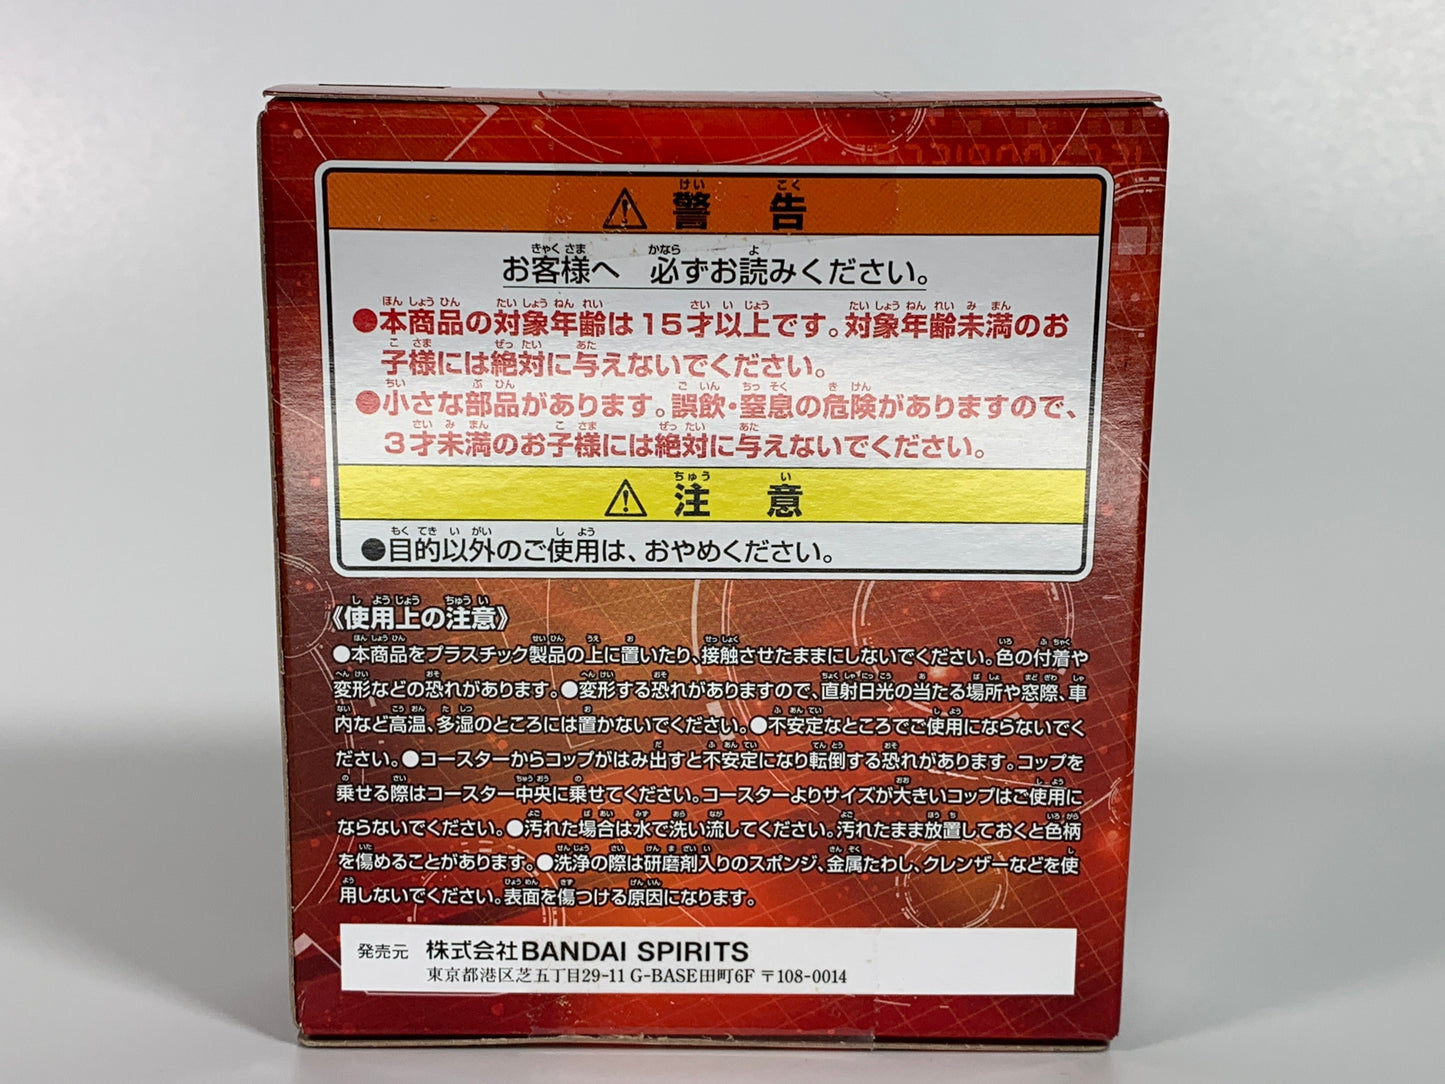 [BOXED] Ichiban-Kuji: Kamen Rider Zi-Oh Rubber Coaster - A.D 2004 Blade | CSTOYS INTERNATIONAL